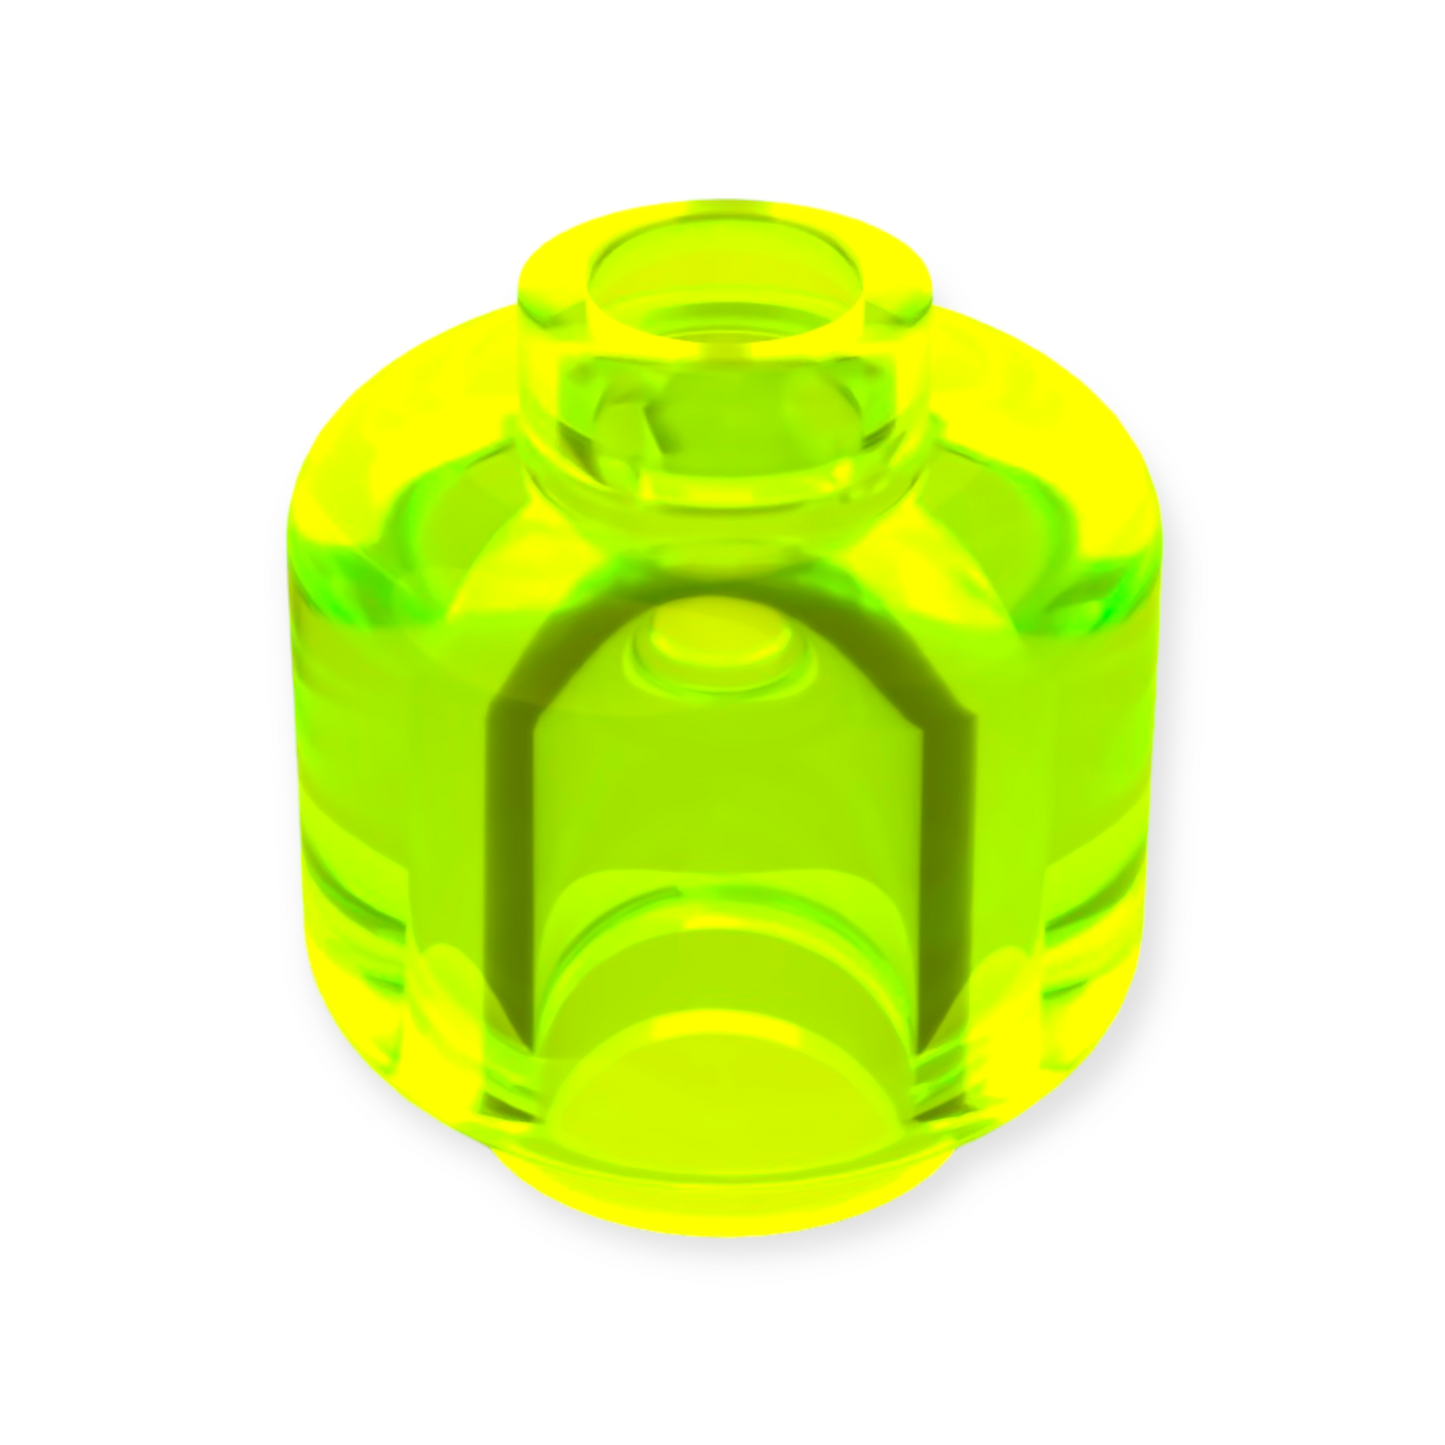 LEGO Head - Trans-Neon Green